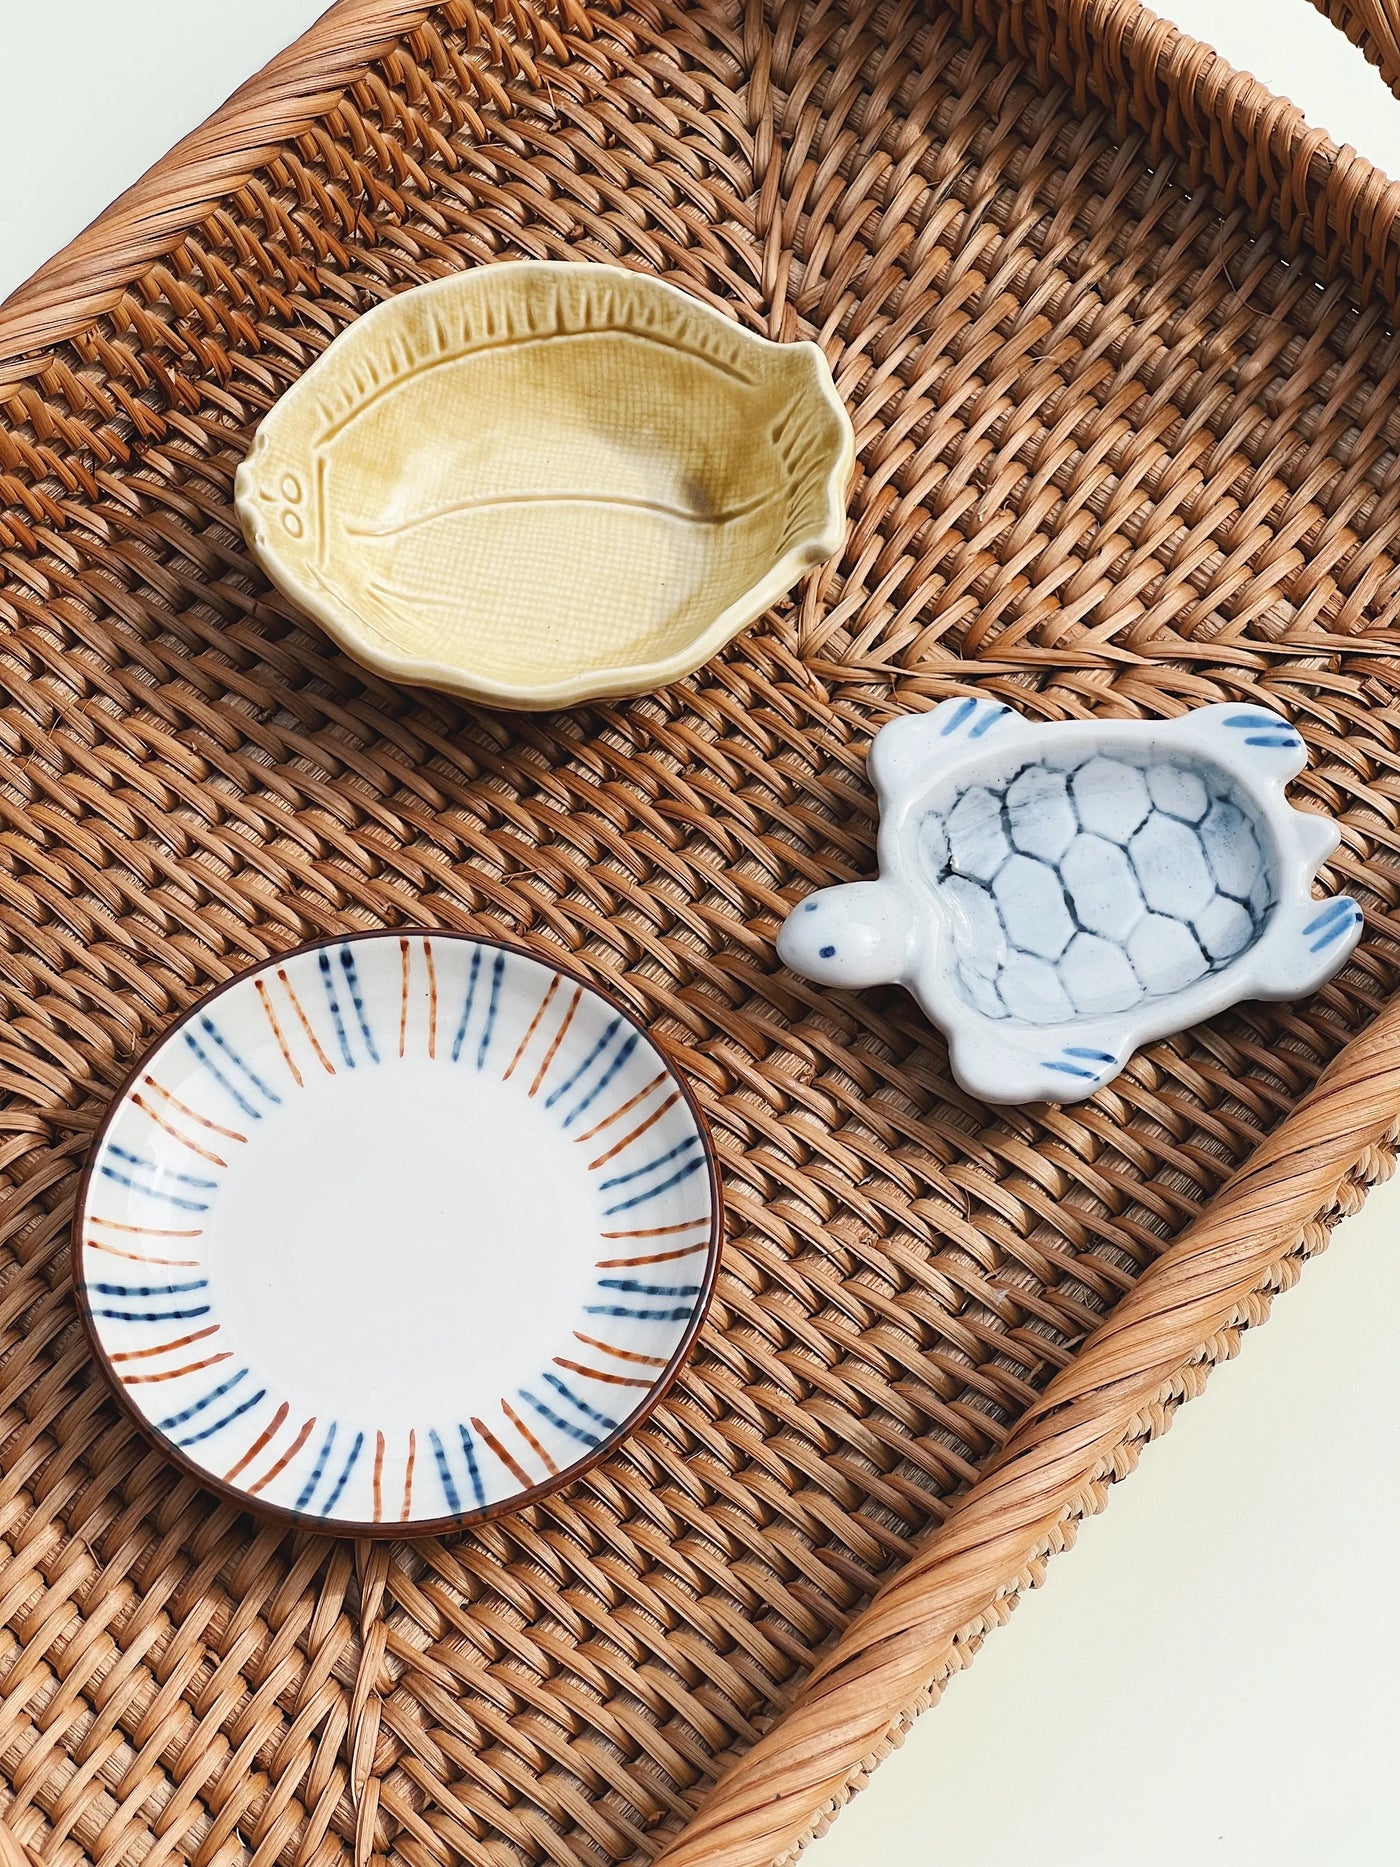 Japansk skål formet som en fisk i keramik | Karrygul Studio Hafnia